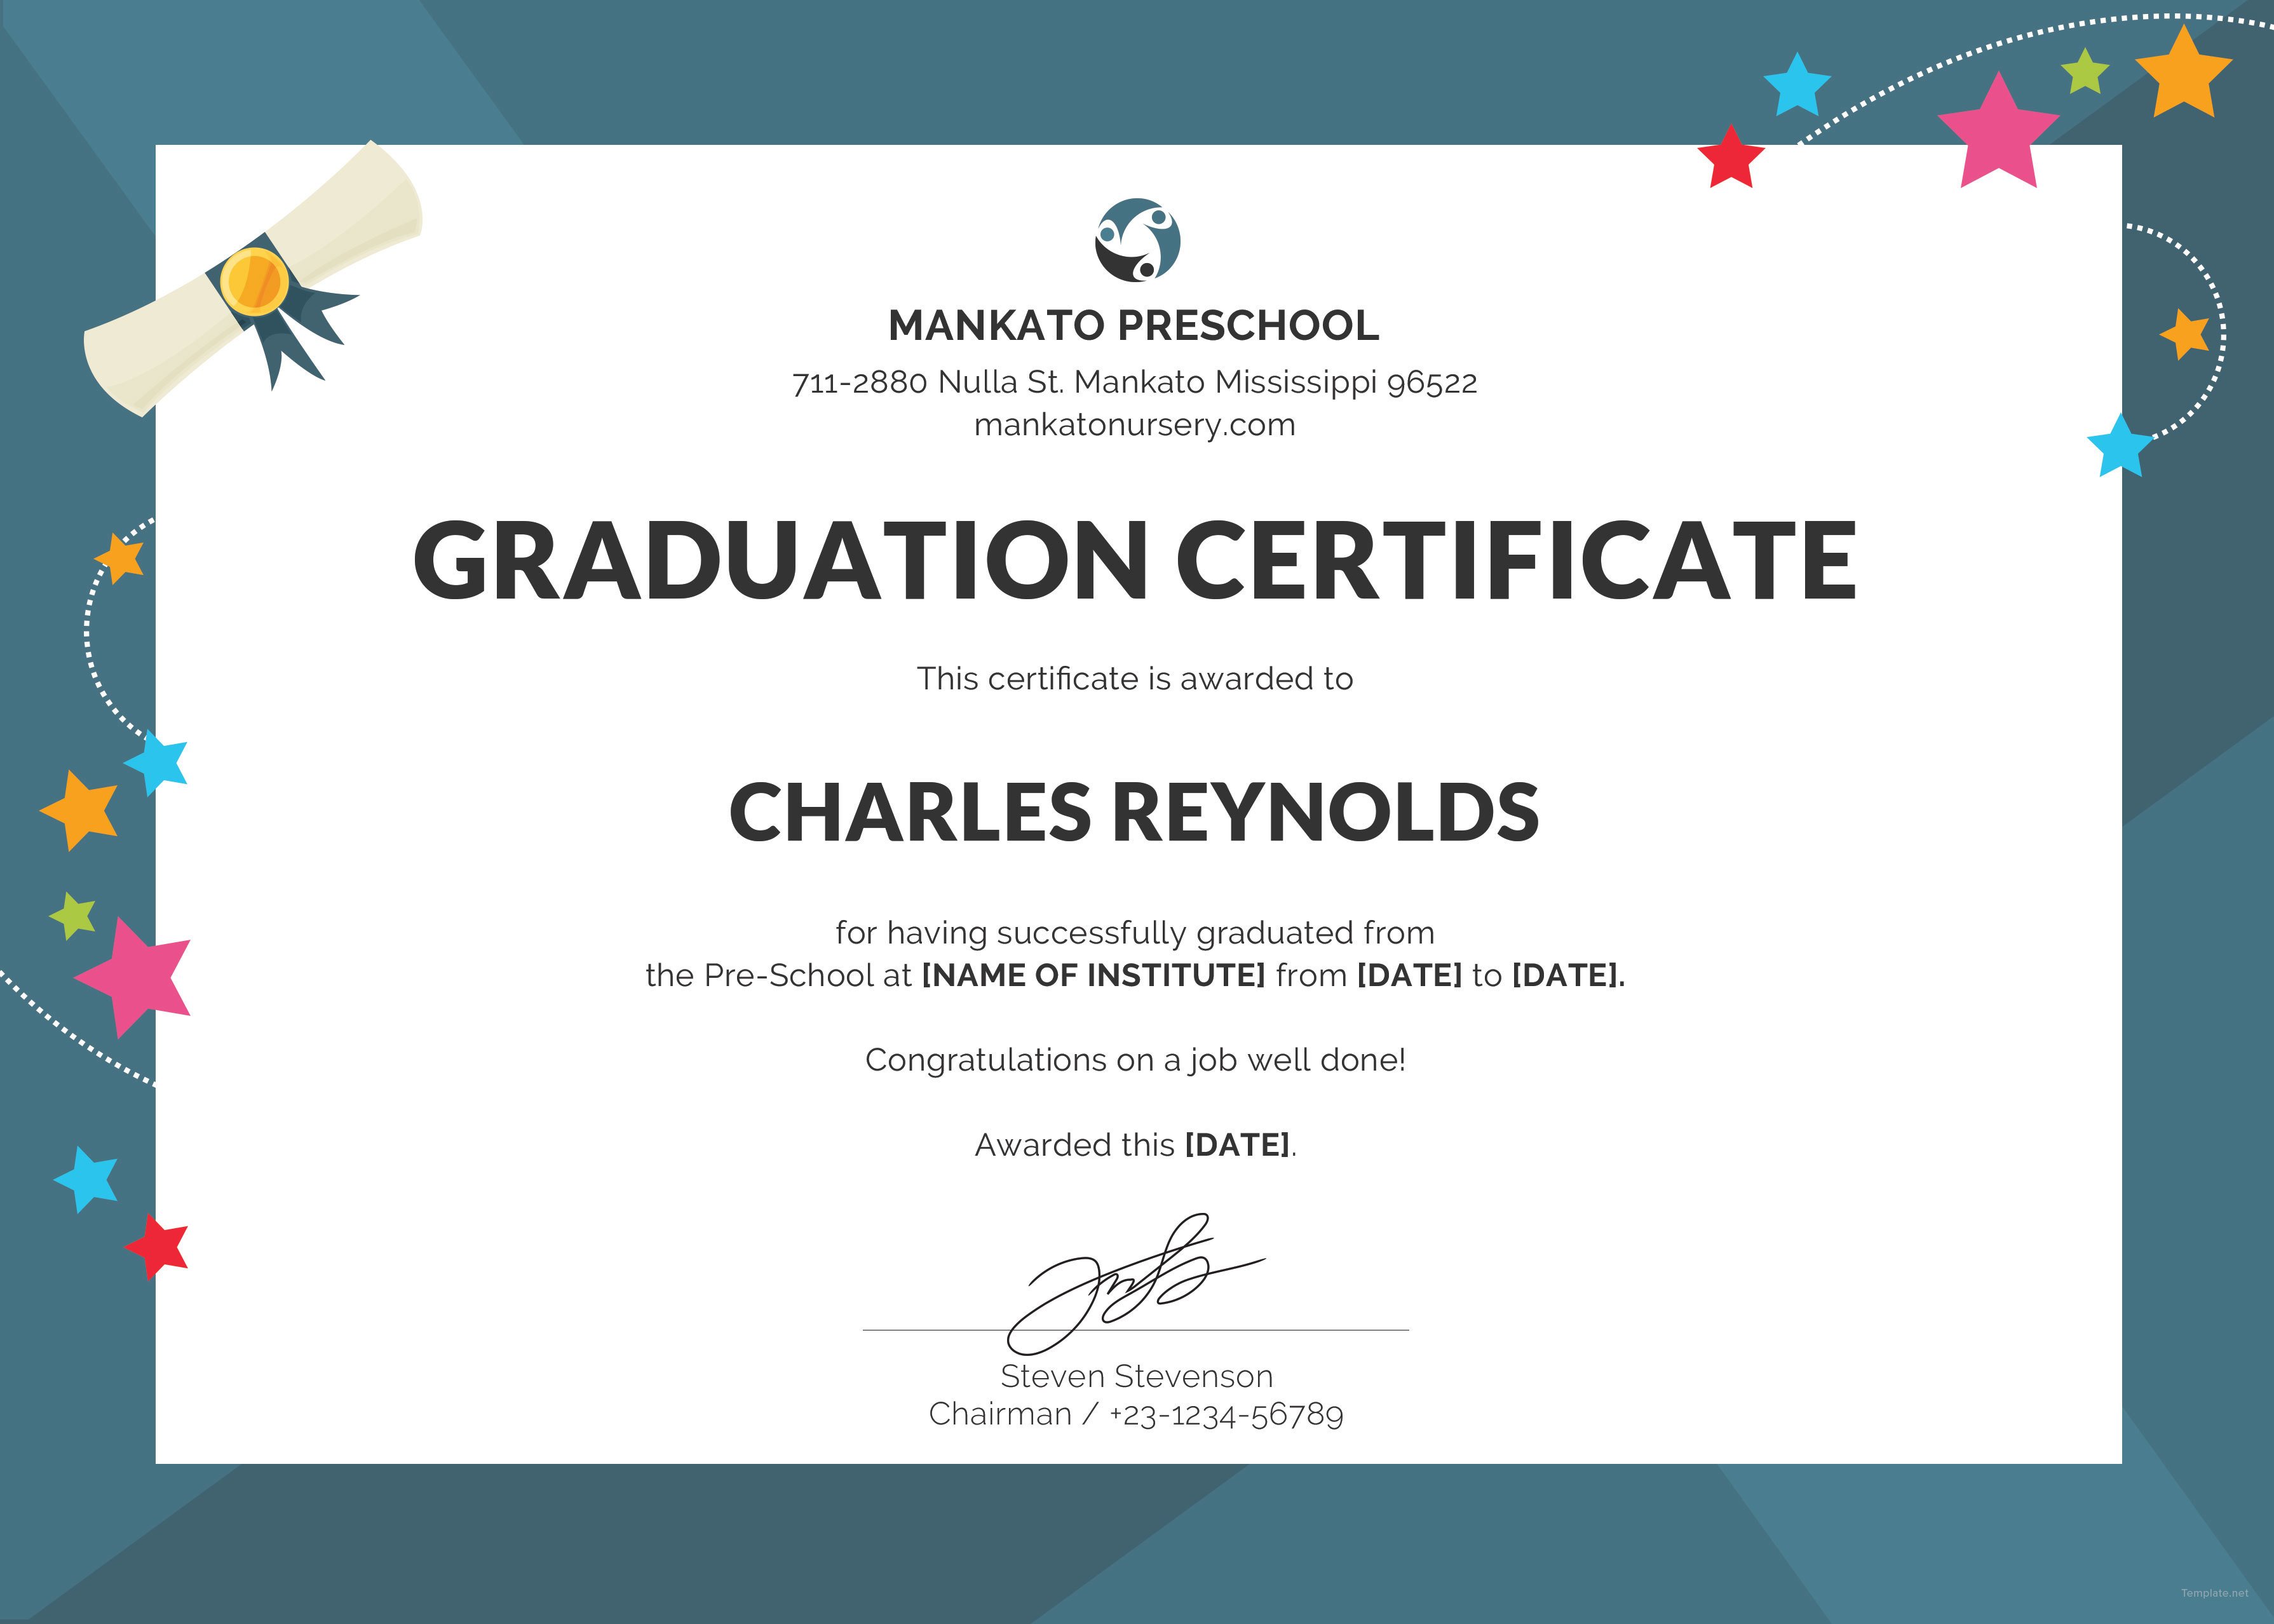 graduate certificate in education (early childhood)